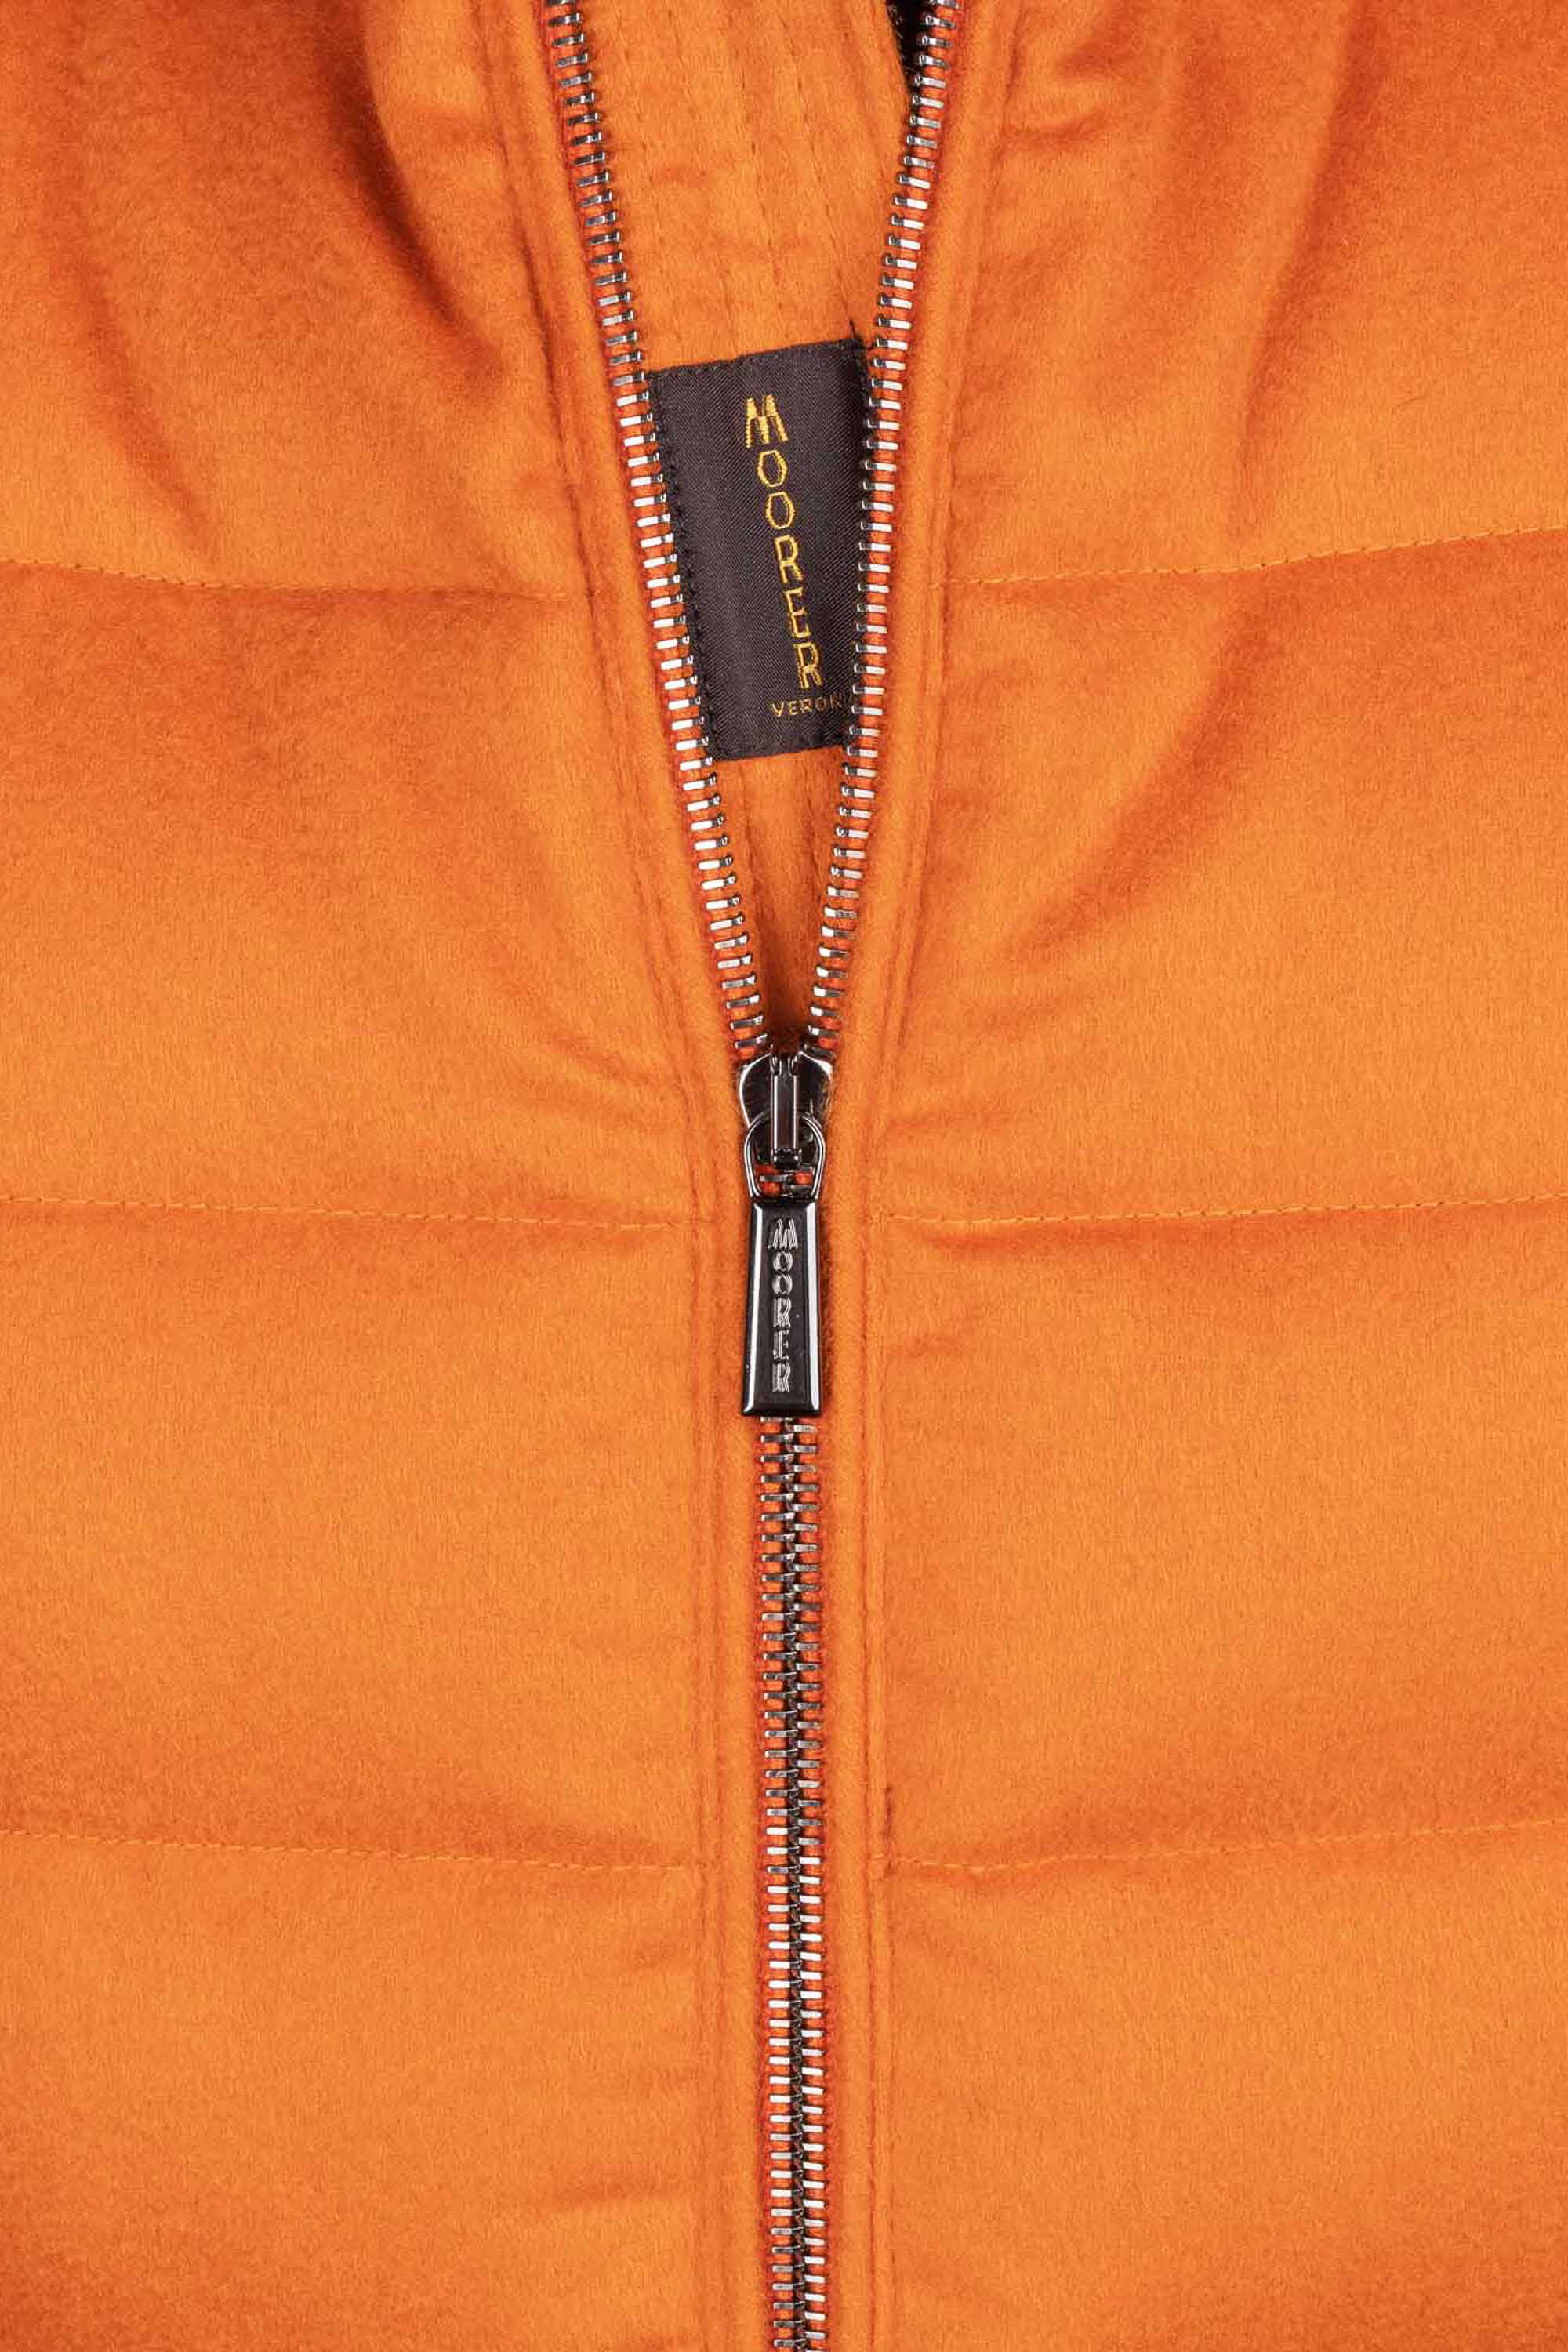 OLIVER-IL1 in ORANGE: Luxury Italian Vests for Men | MooRER® AE